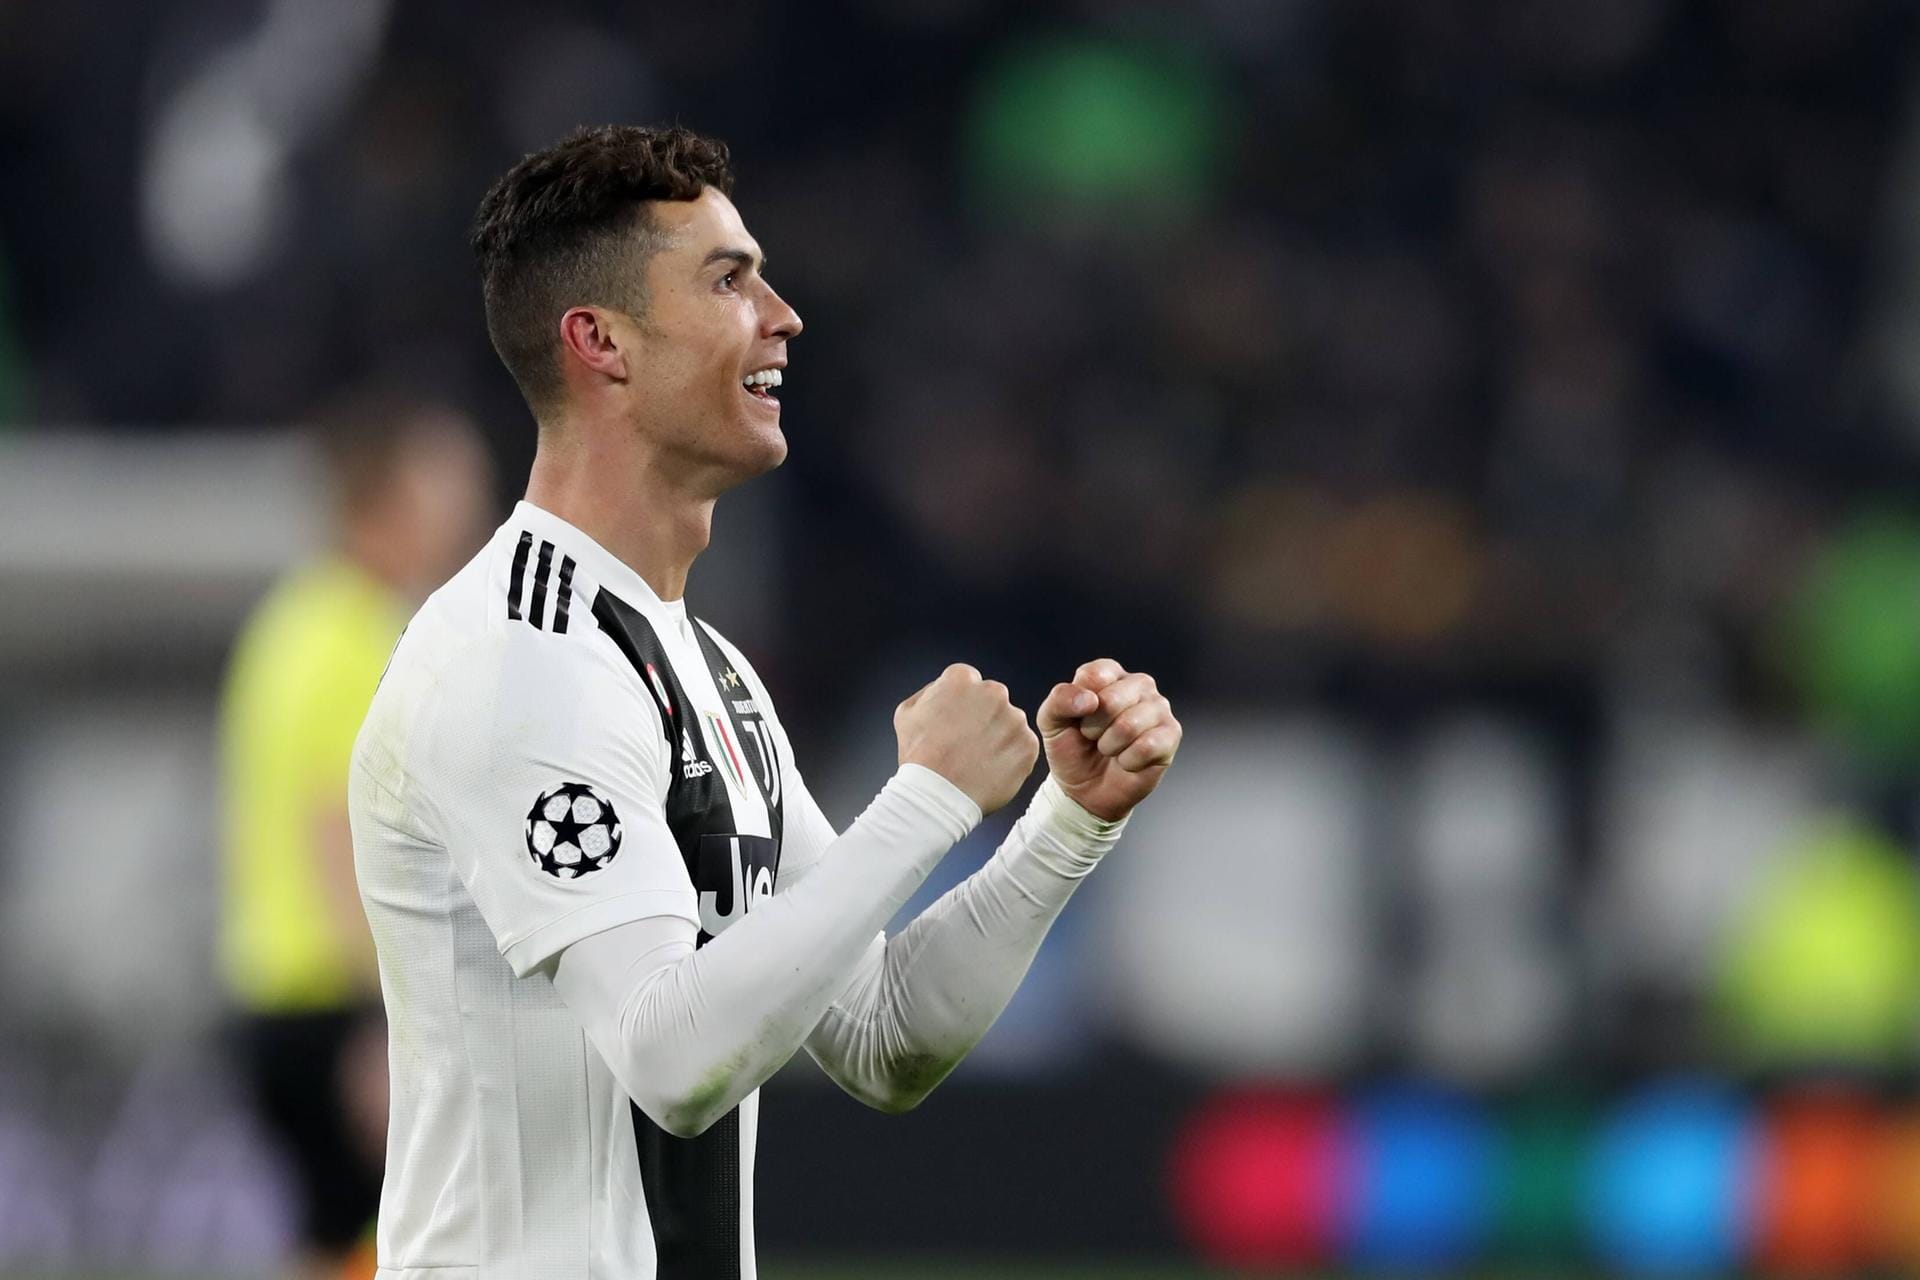 Platz 2: Cristiano Ronaldo (Fußball/Juventus Turin/Portugal) – 109 Mio. US-Dollar.